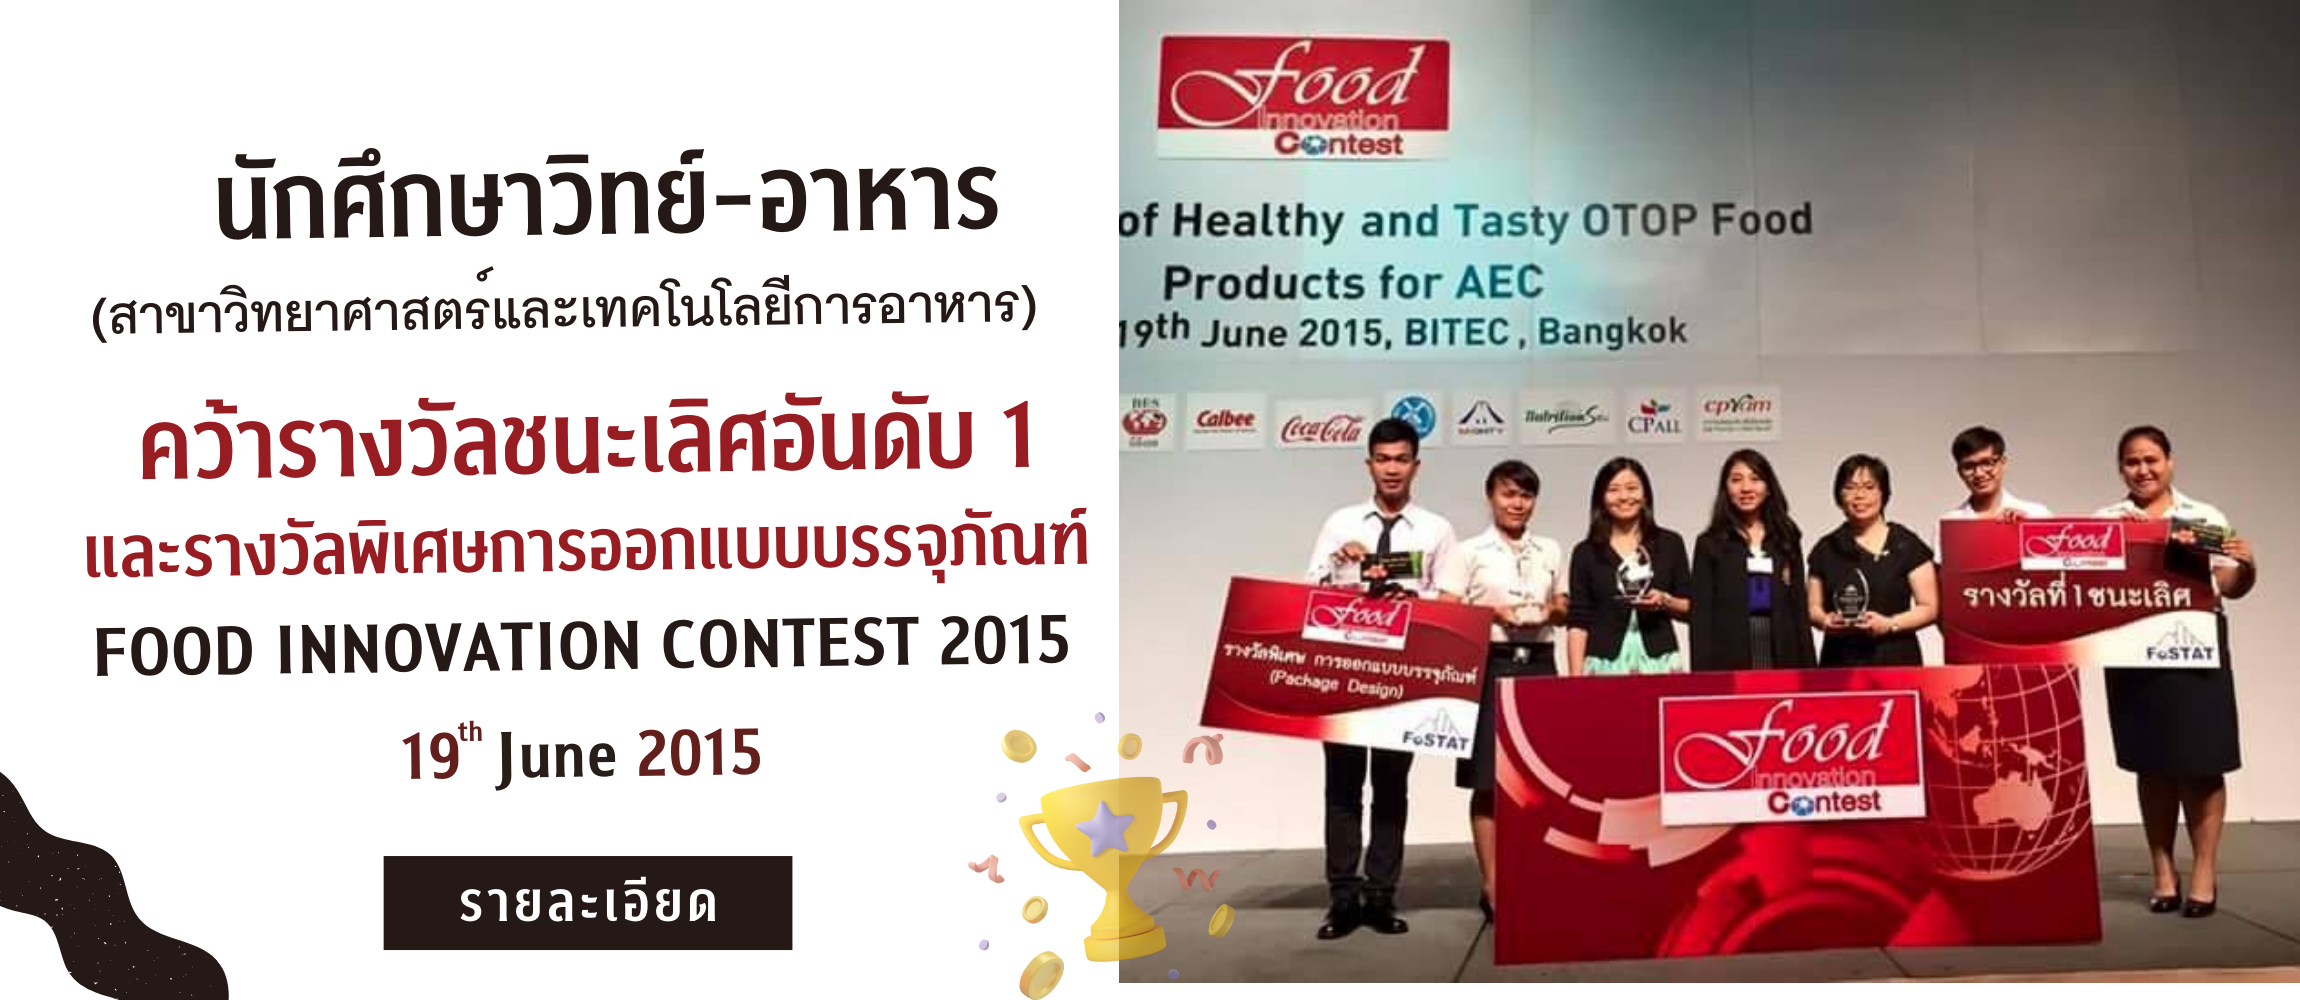 Food Innovation Contest 2015